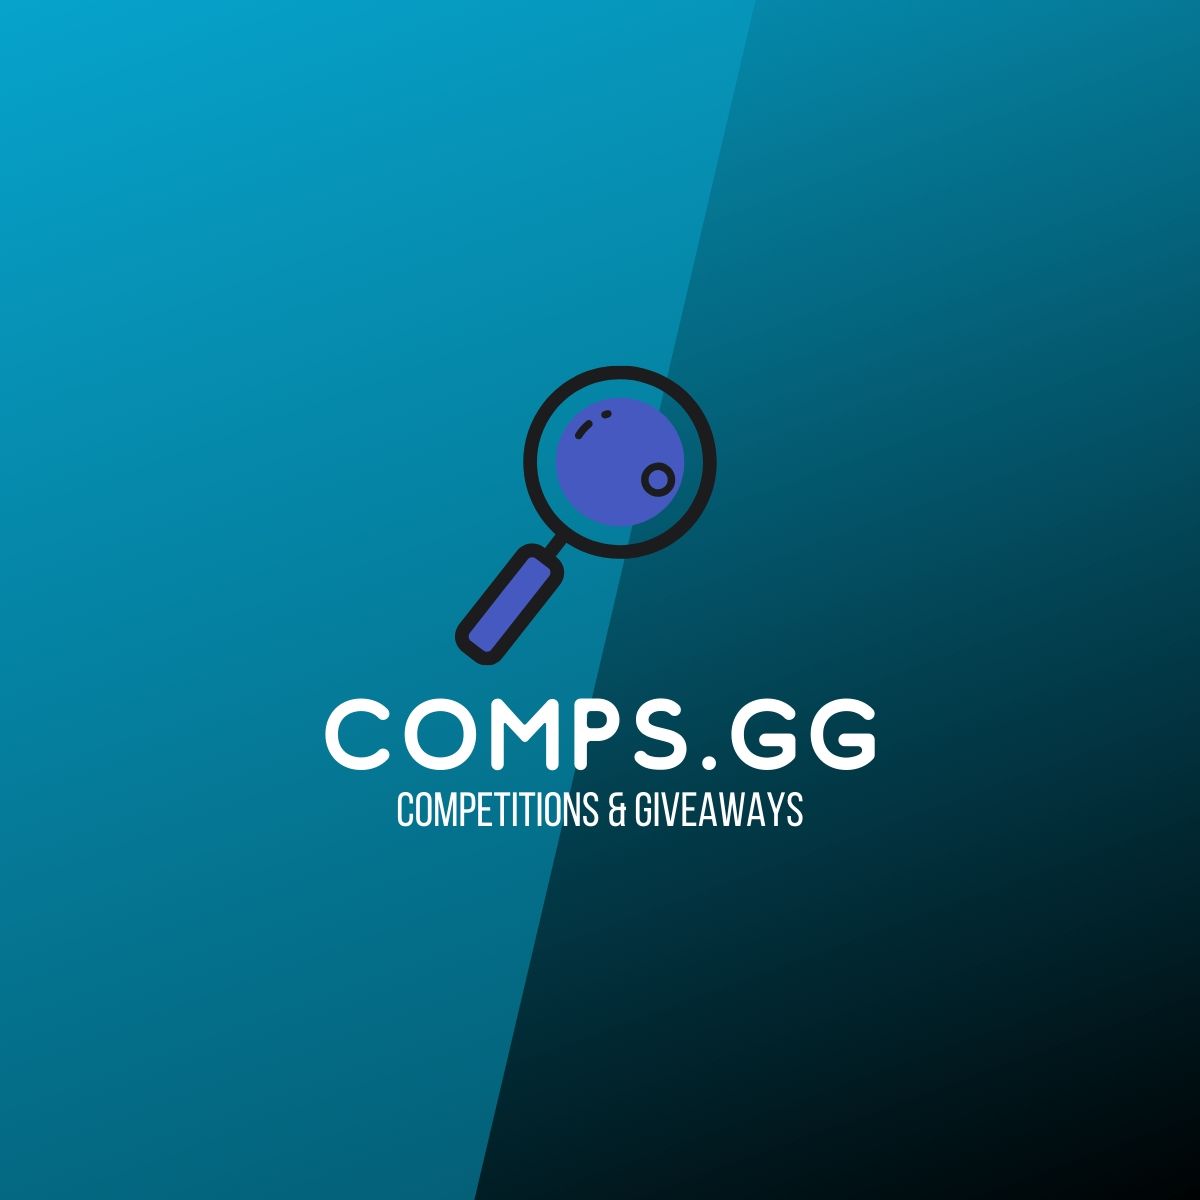 comps.gg image